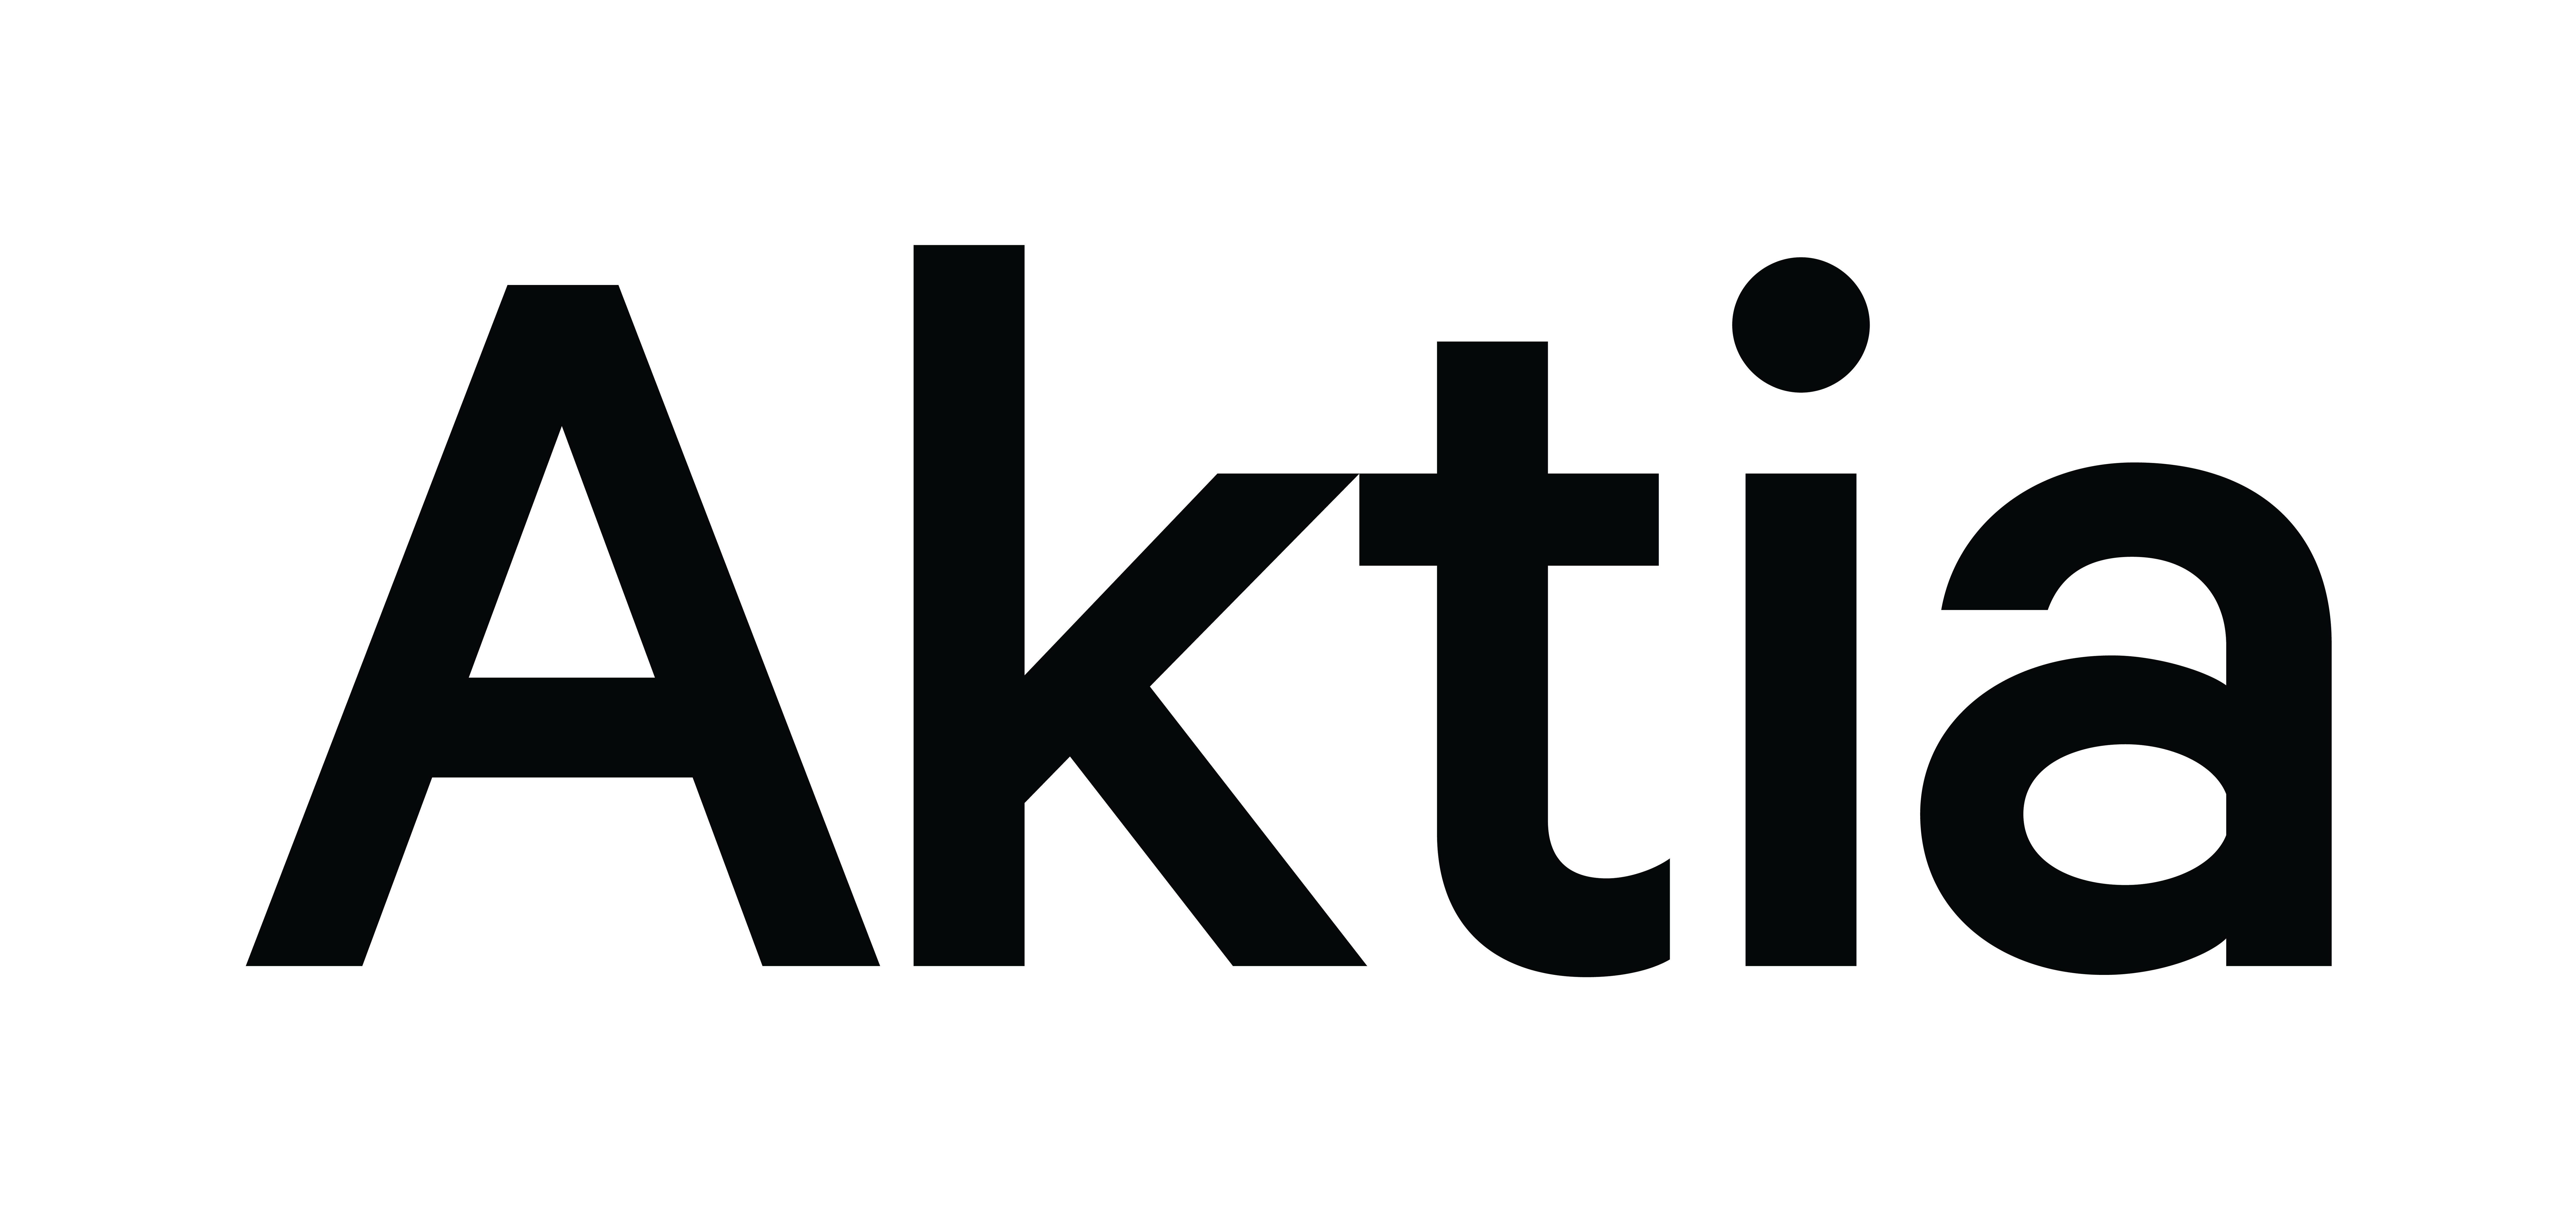 aktia-logo-black-download (1)